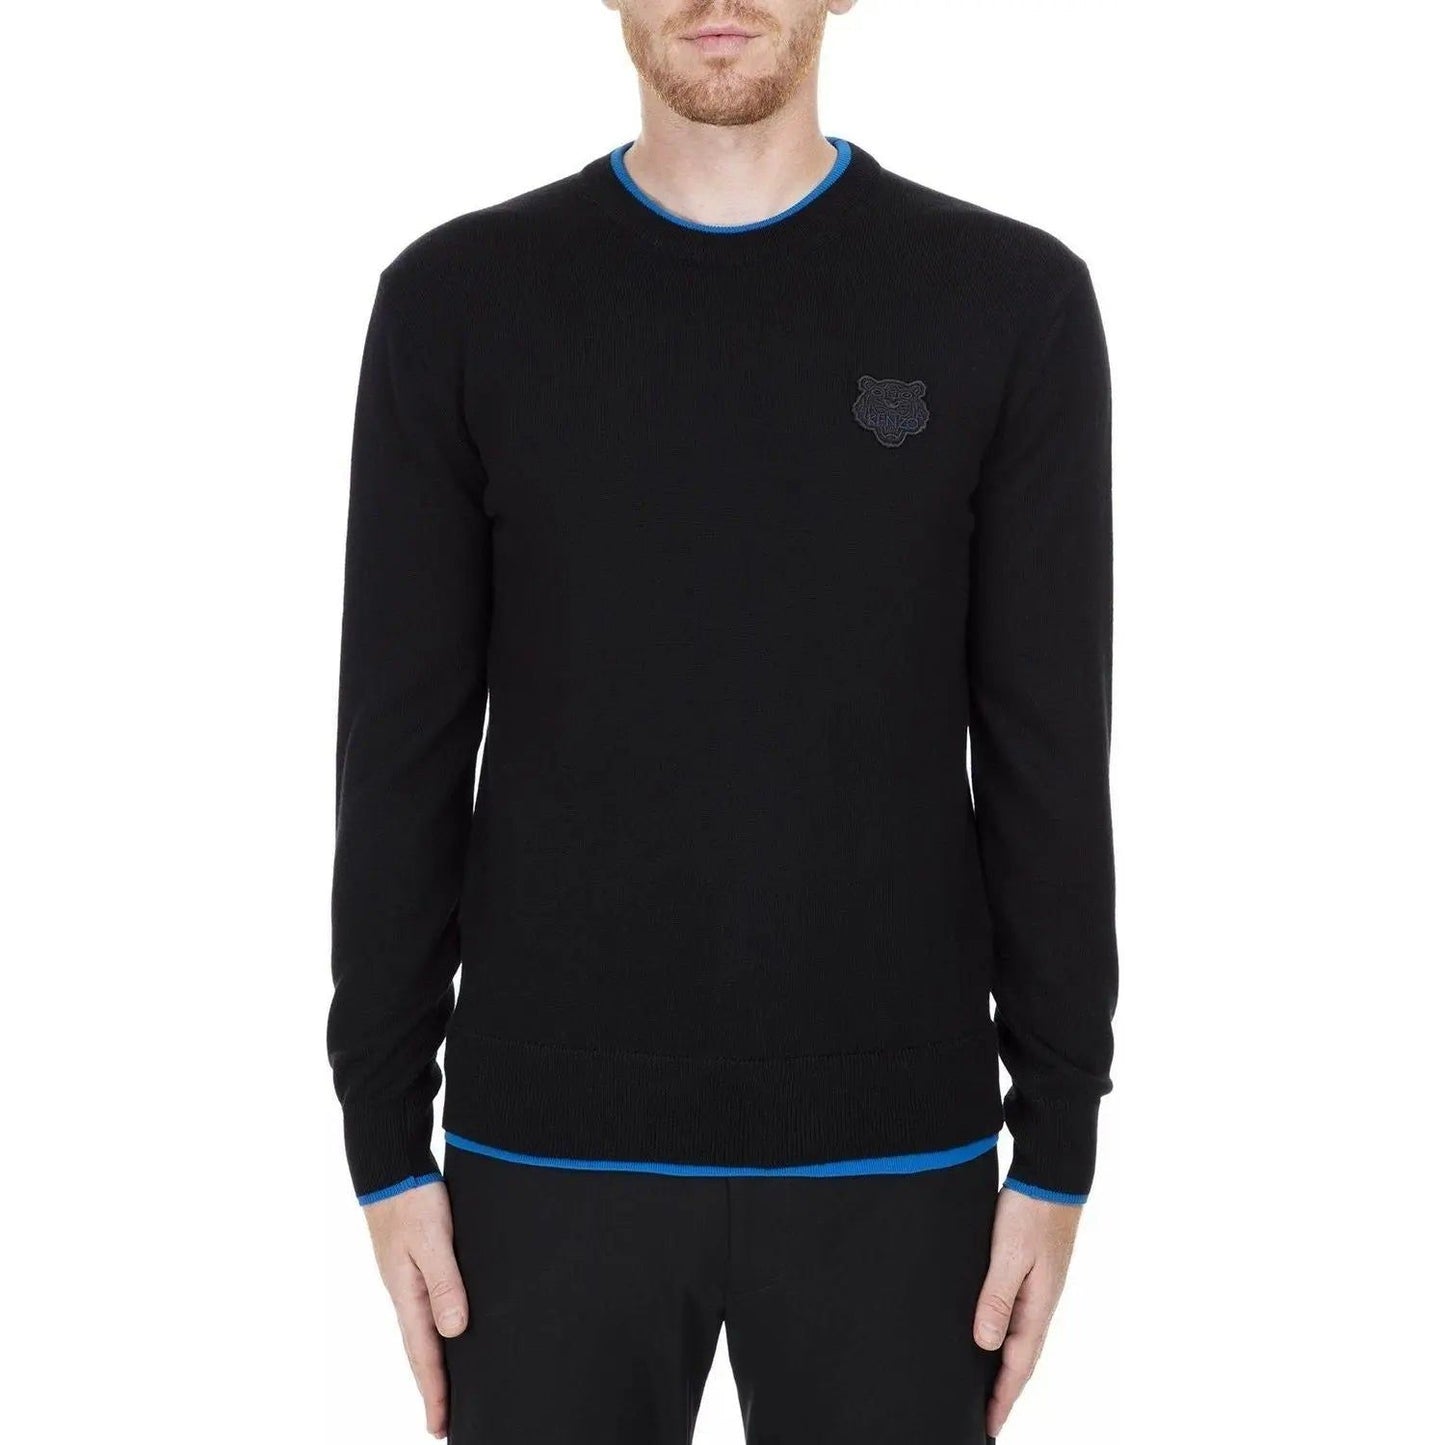 Kenzo Sleek Black Roundneck Sweater with Blue Accents sleek-black-roundneck-sweater-with-blue-accents Kenzo-_-Sleek-Black-Roundneck-Sweater-with-Blue-Accents-_-McRichard-Designer-Brands-113101084.jpg